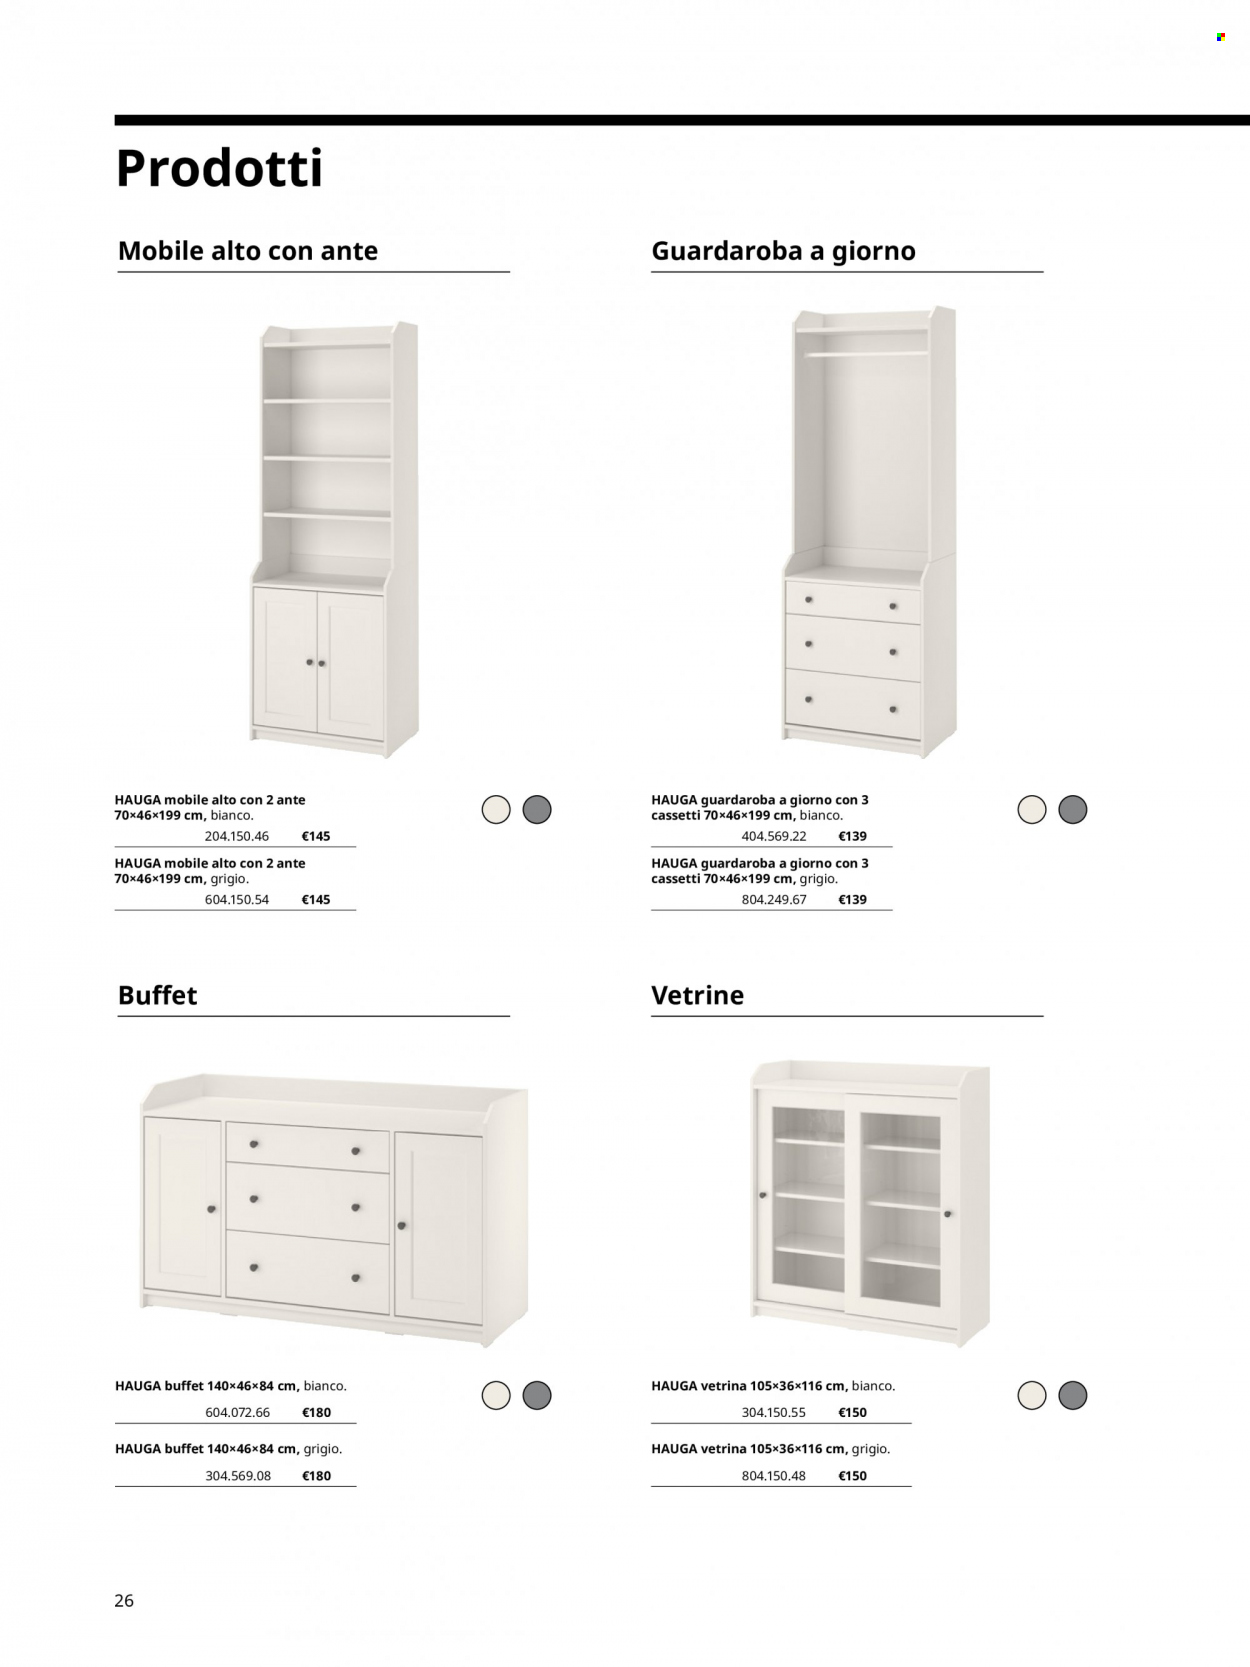 Volantino IKEA. Pagina 26.